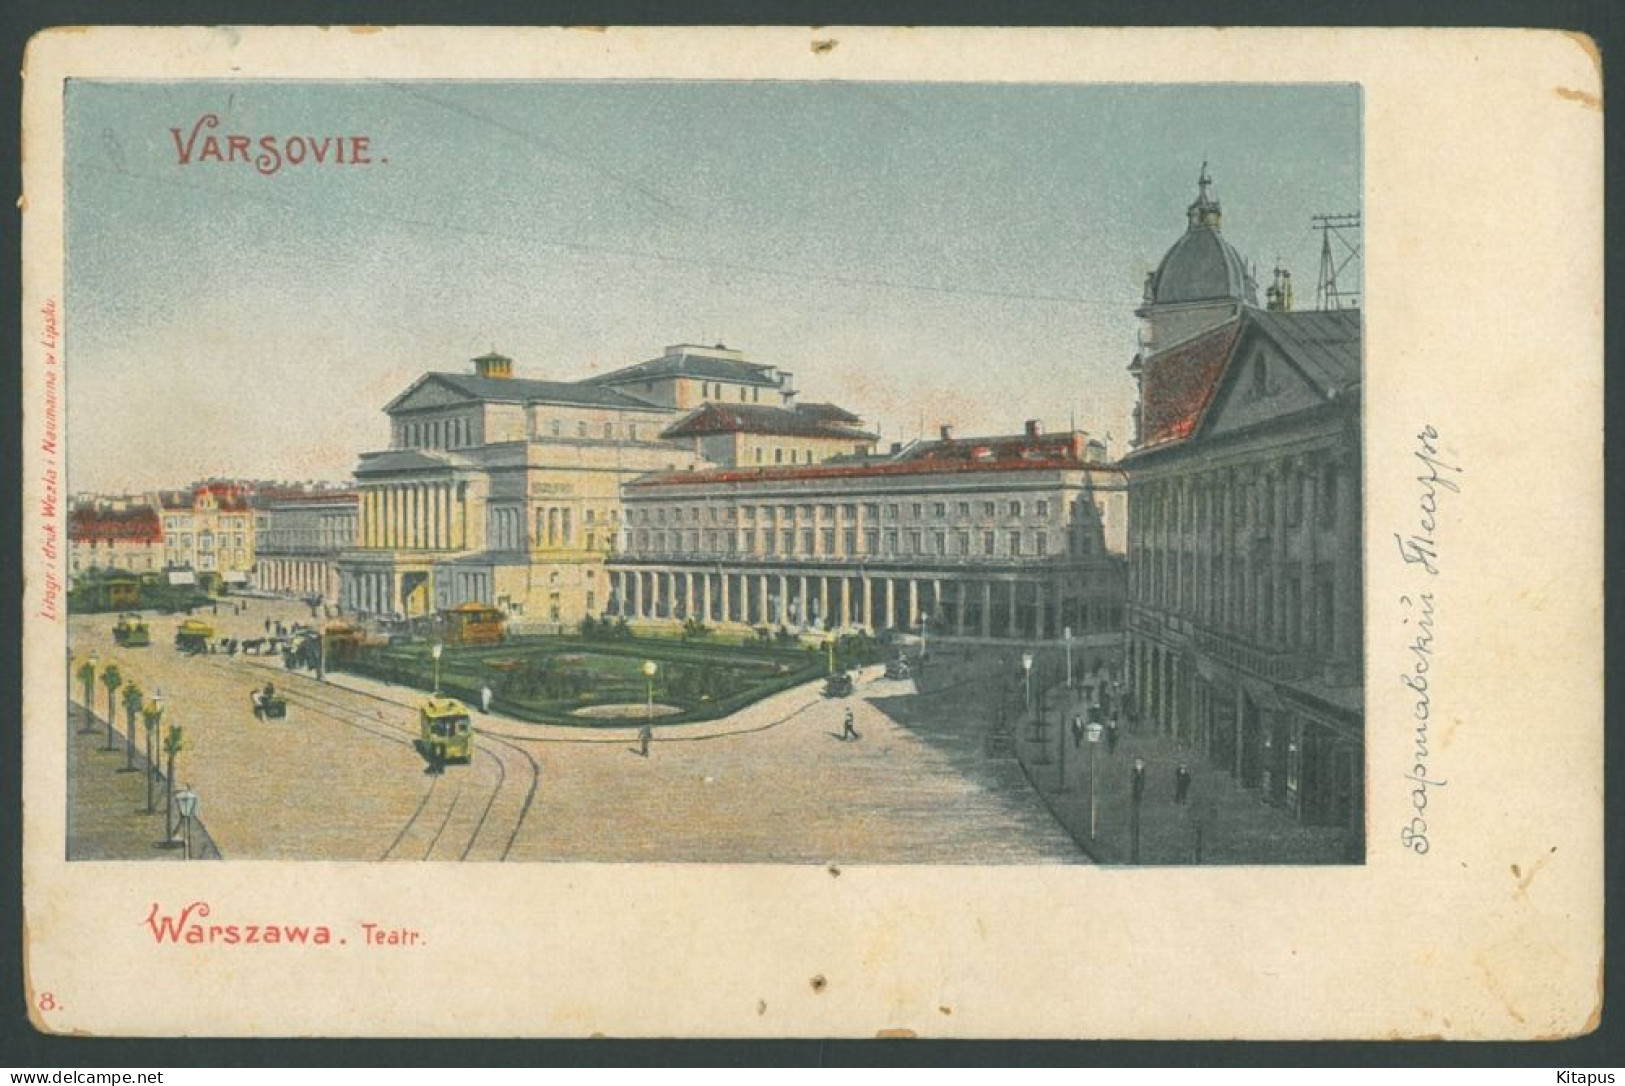 WARSZAWA Vintage Postcard 1906 Warsaw Varsovie Warschau Poland - Pologne